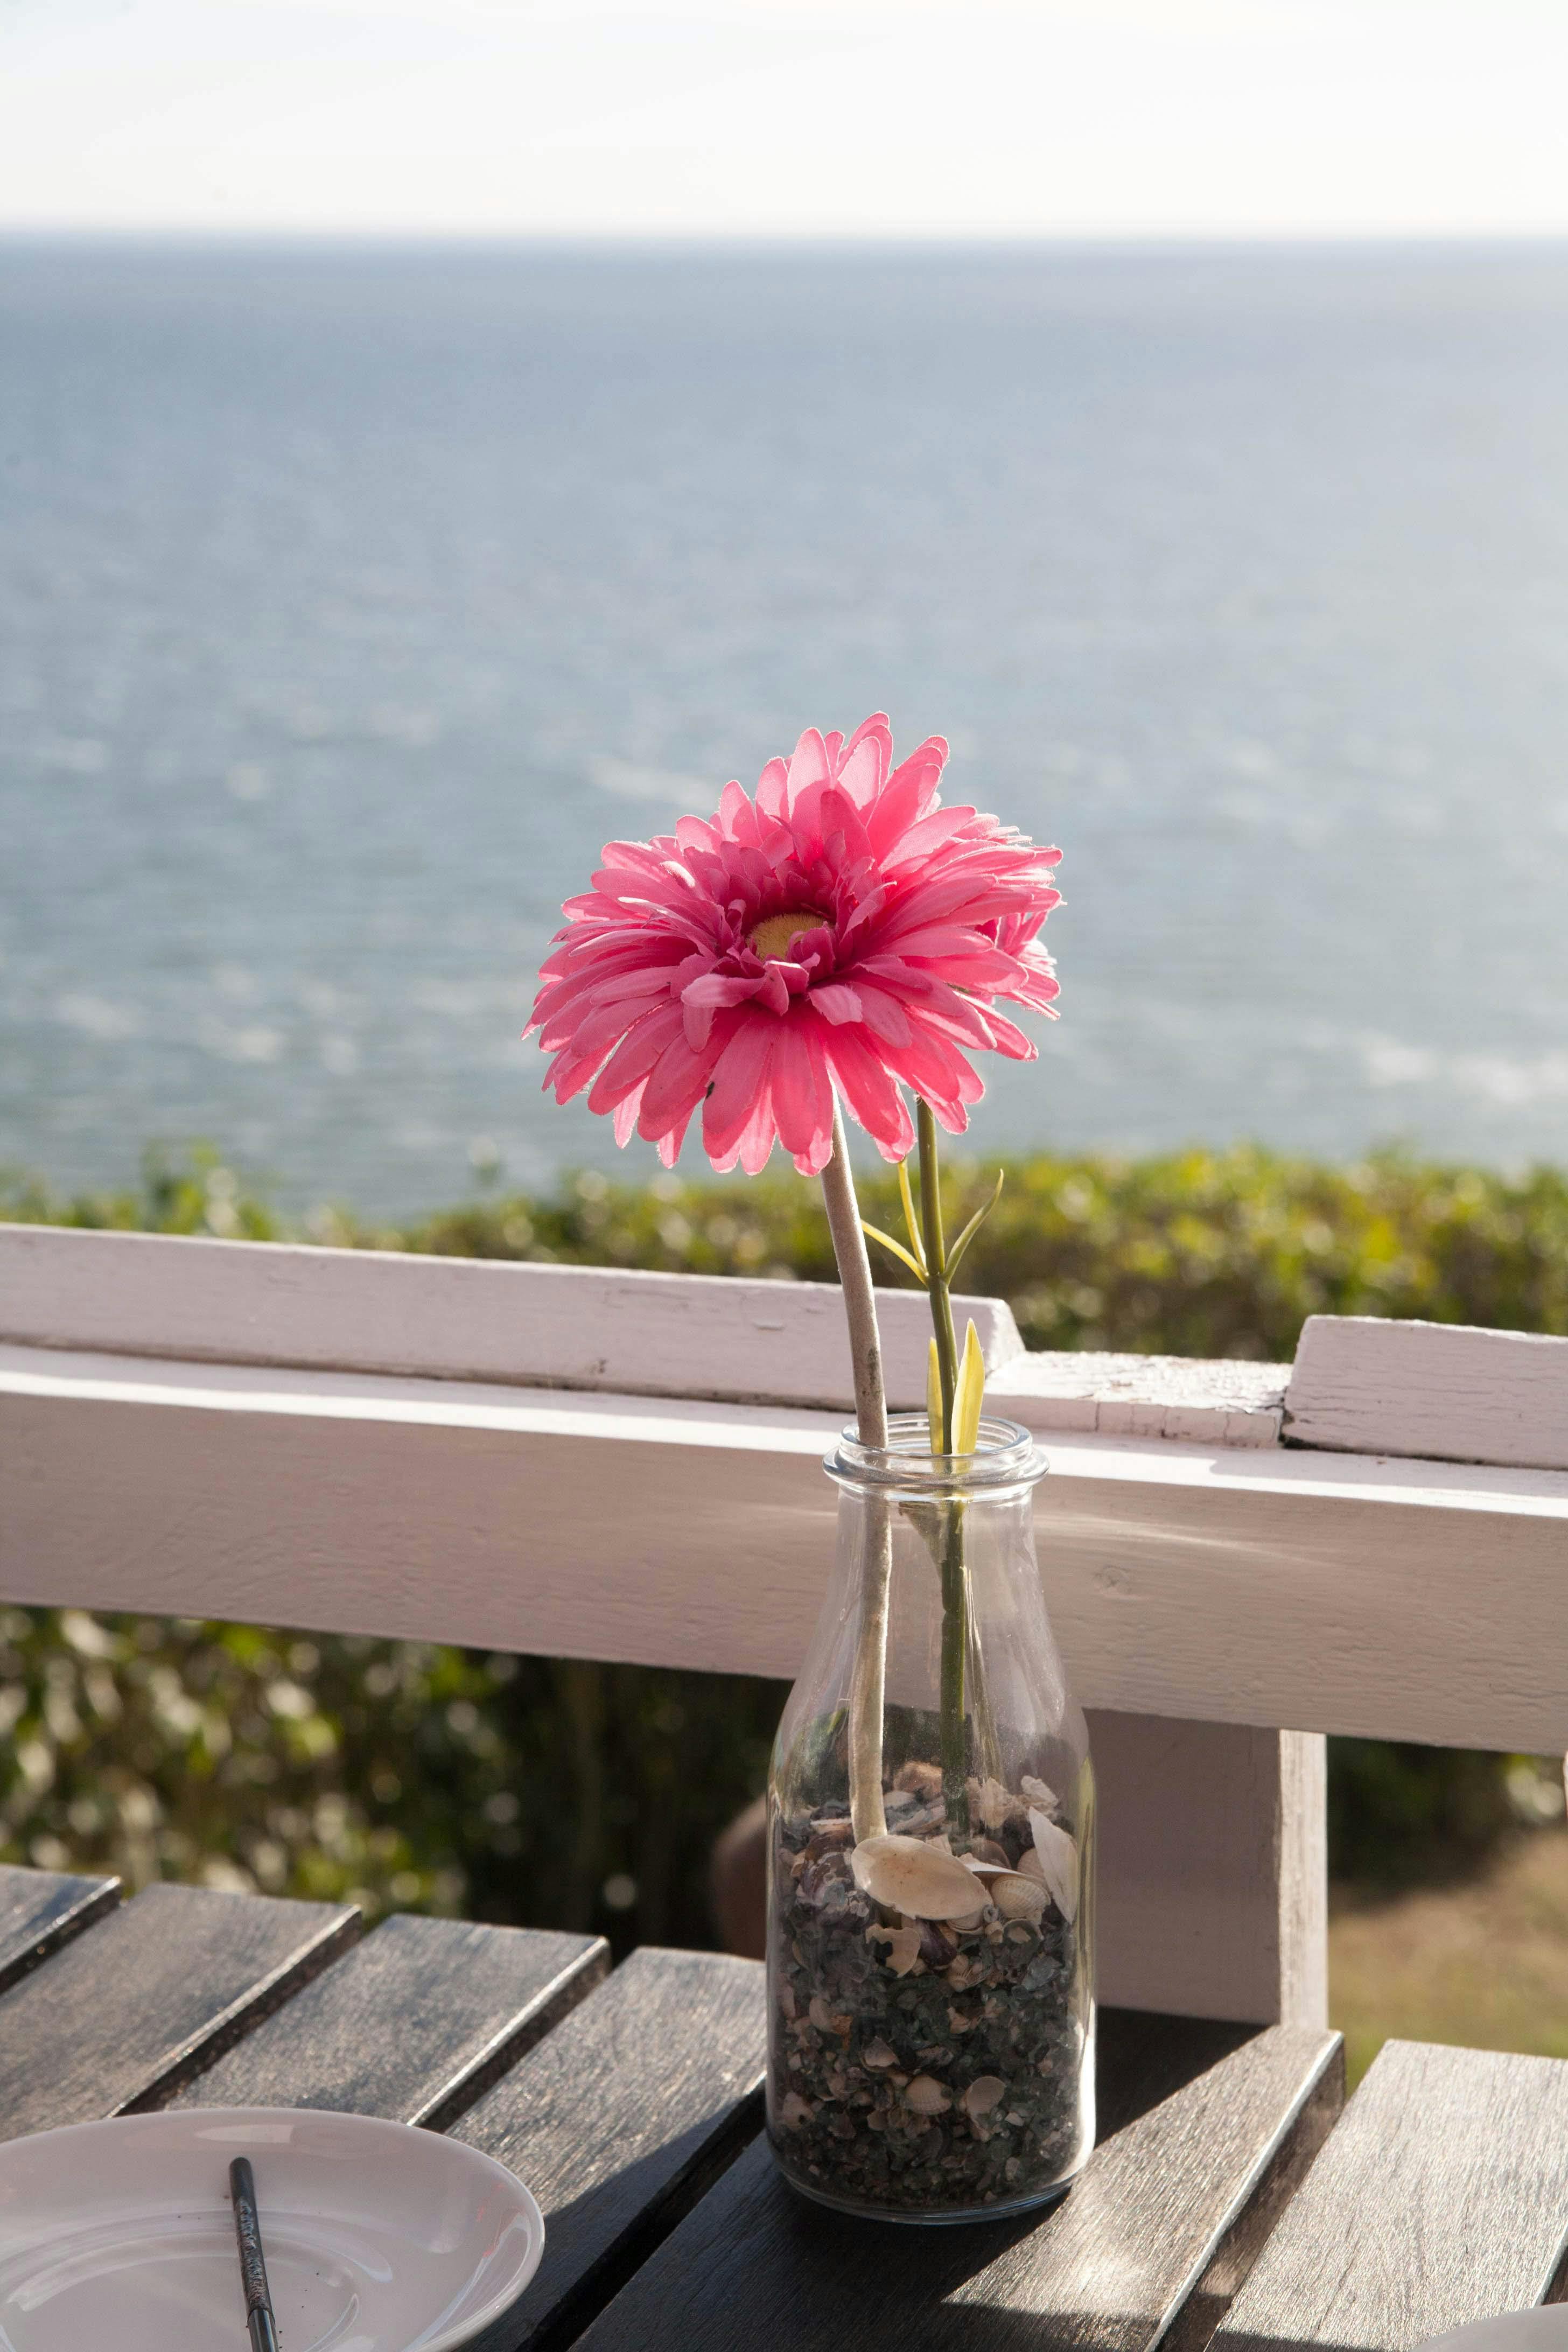 Free stock photo of flower, flower on seaside, pink flower